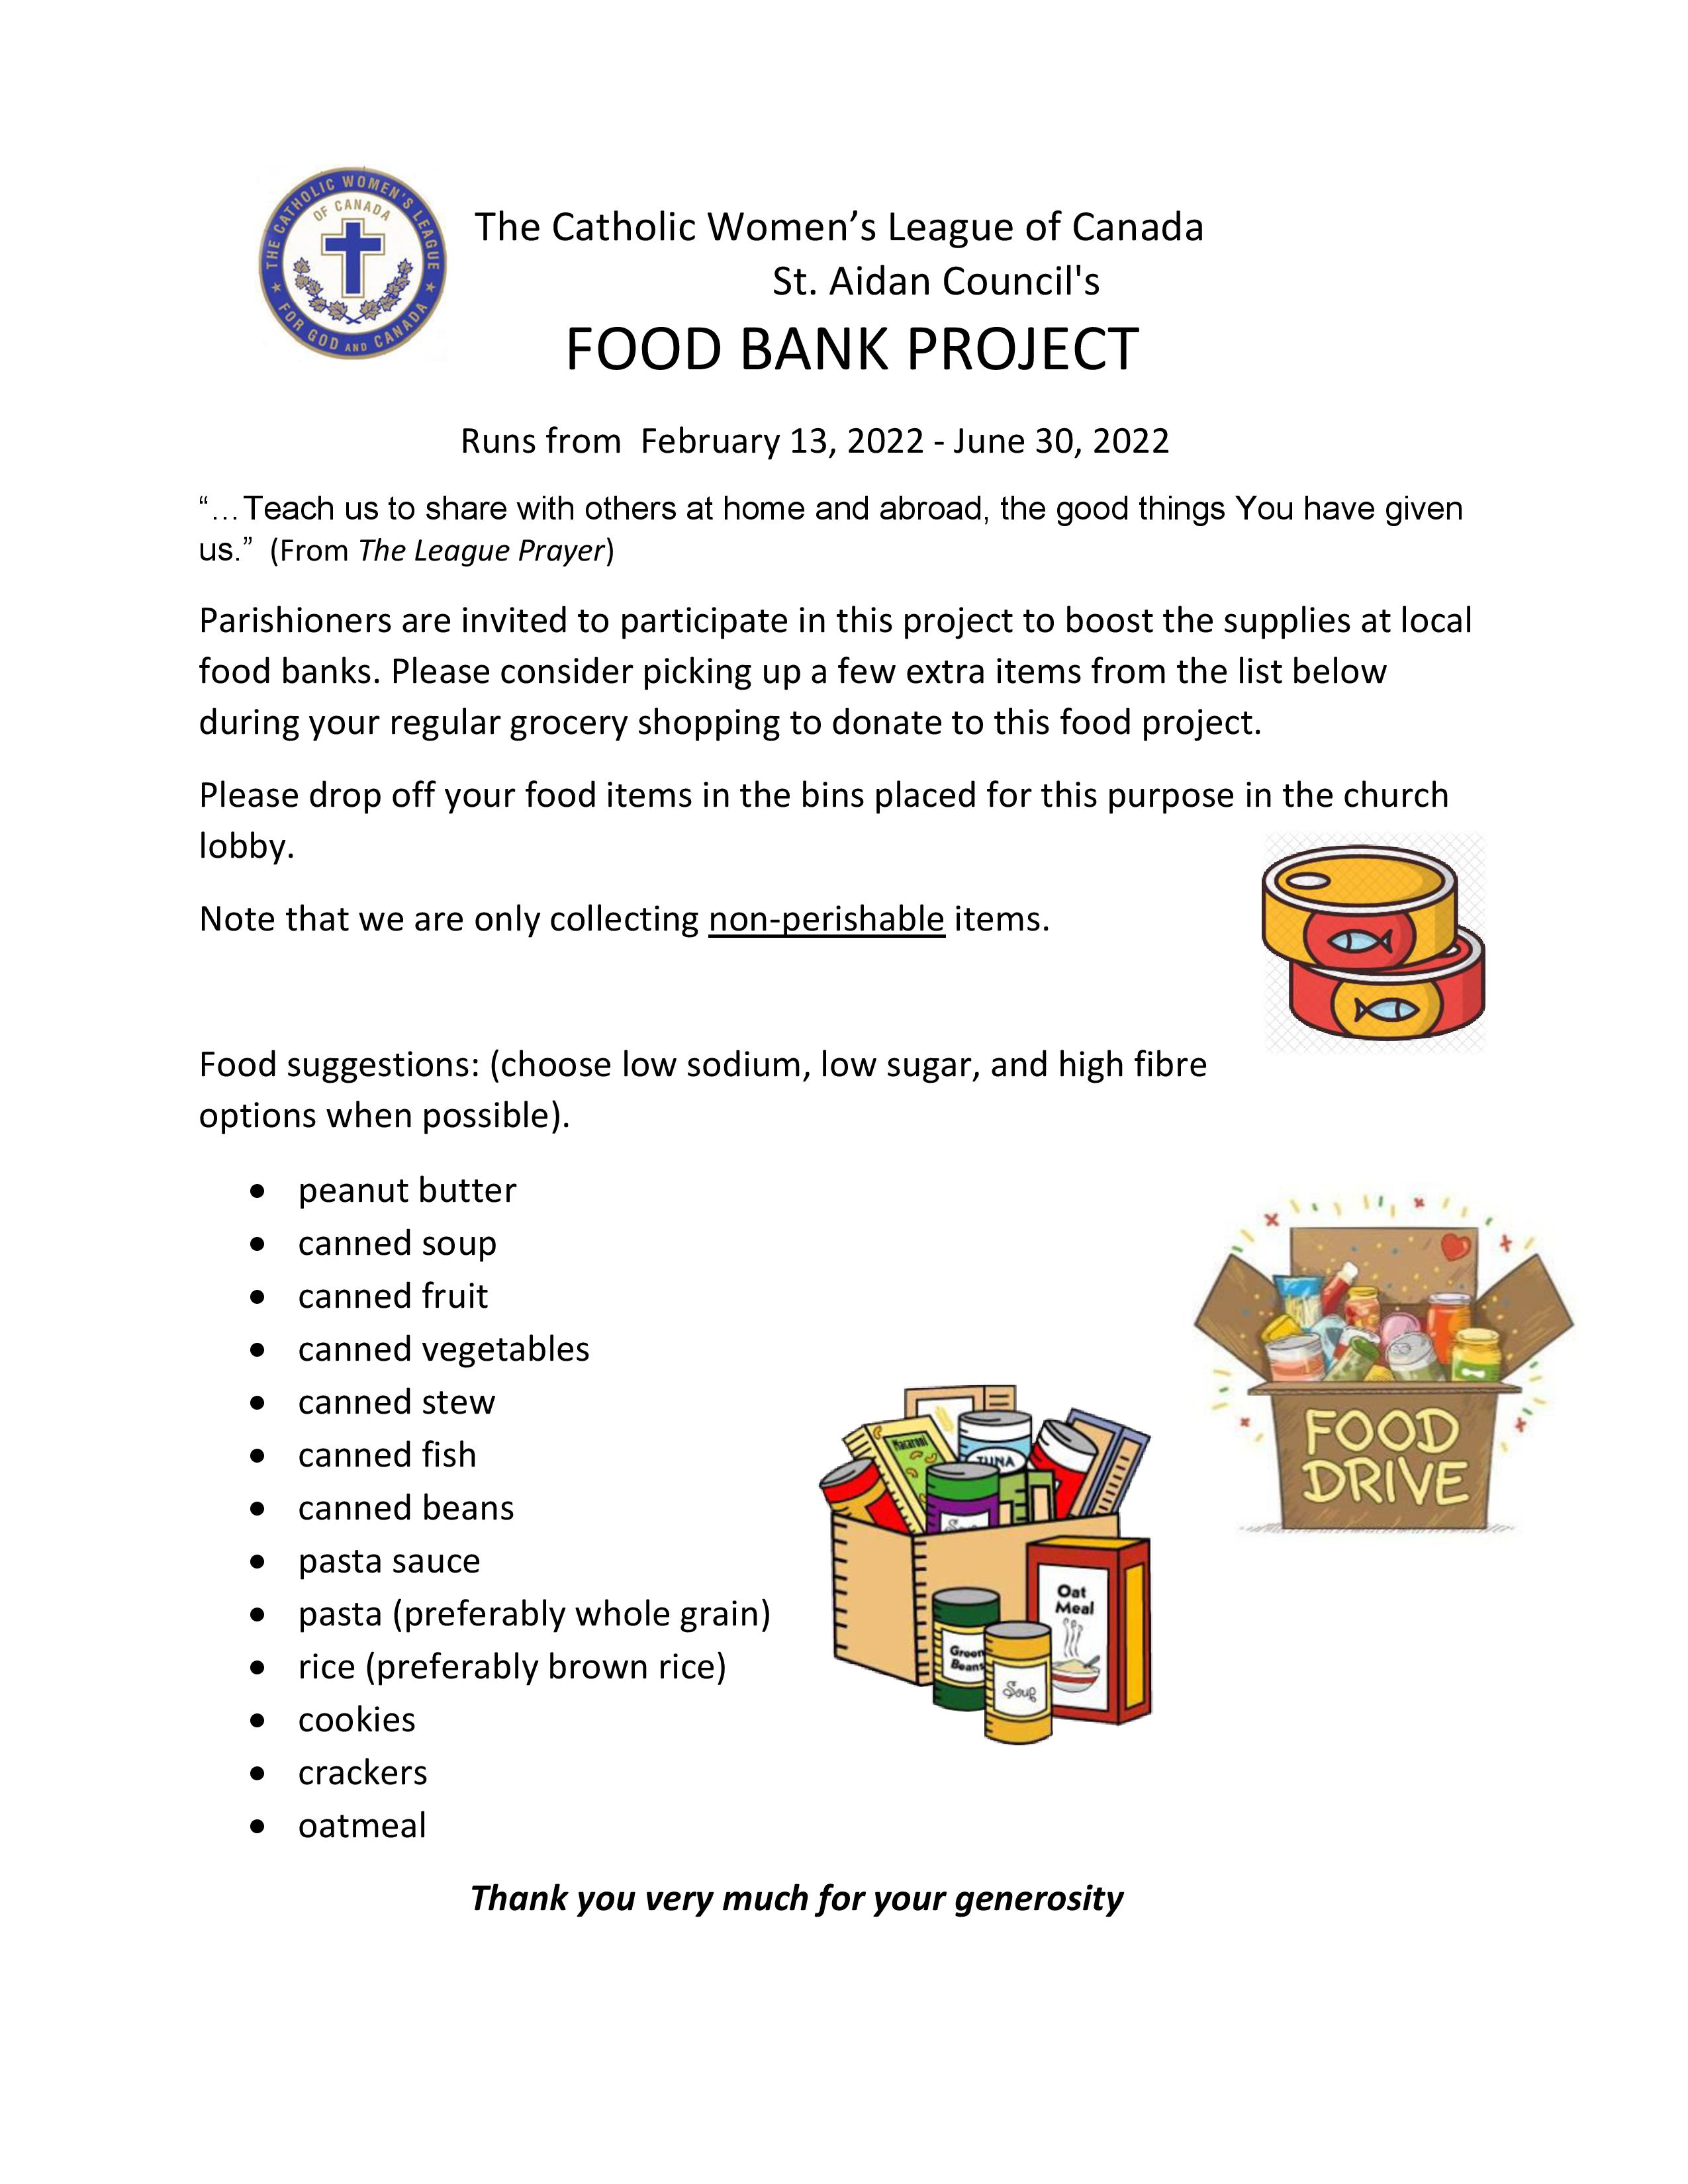 Food Bank Project - CWL St. Aidan Council -Feb to Jun 2022